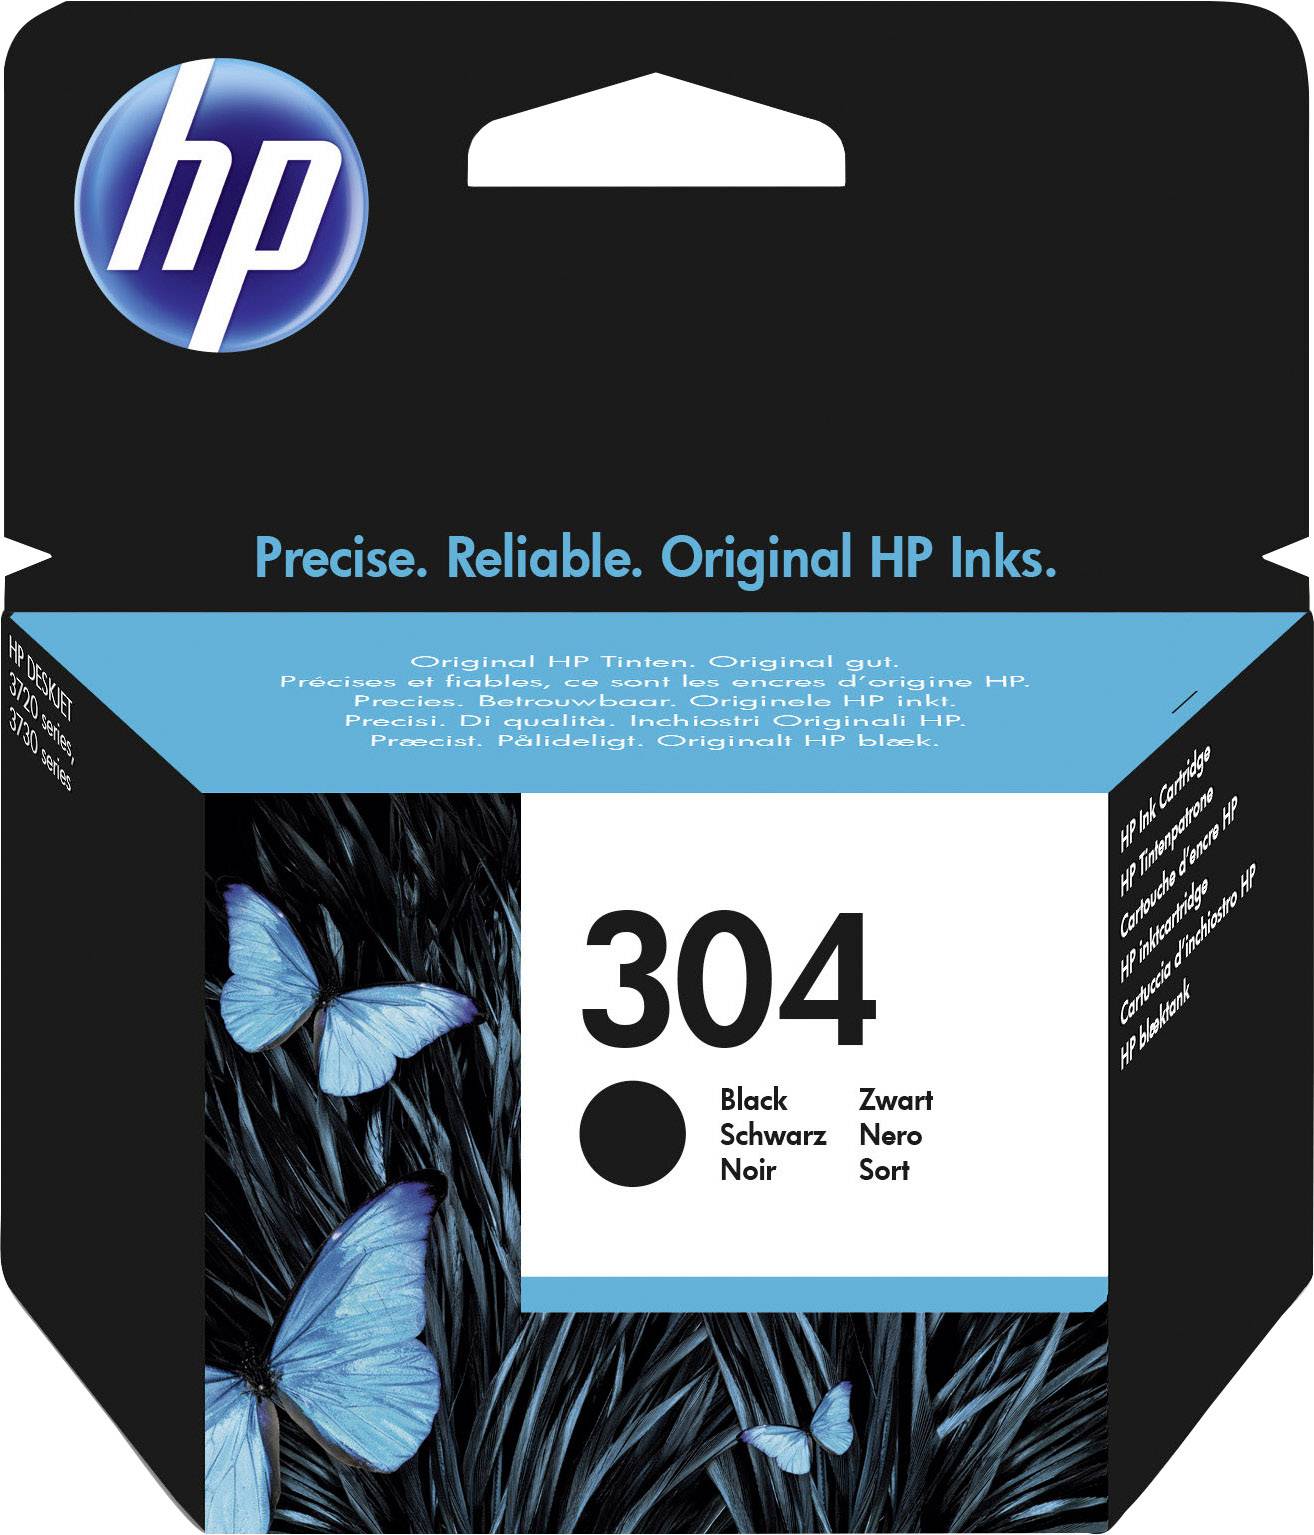 Ambiguity Extraction kitchen HP Ink cartridge 304 Original Black N9K06AE | Conrad.com